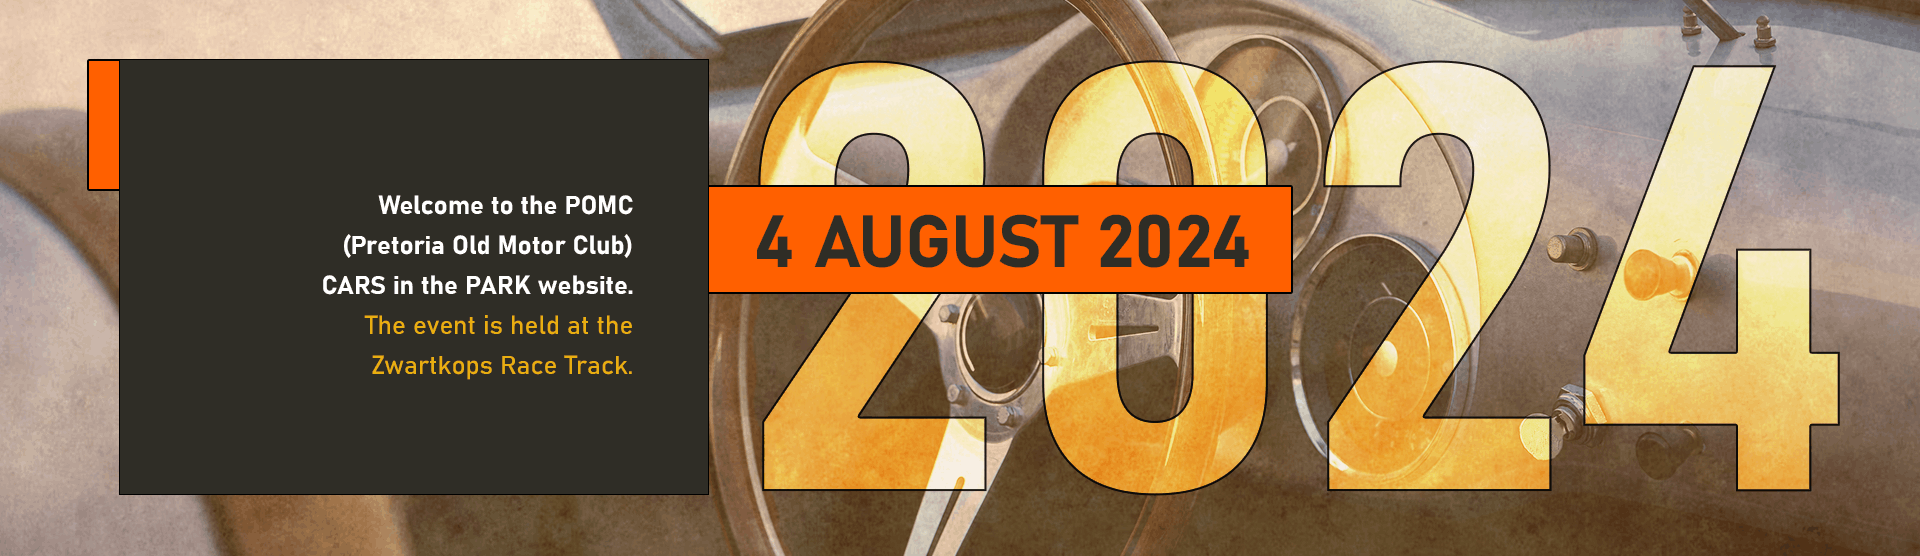 2024 CARS IN THE PARK ZWARTKOPS